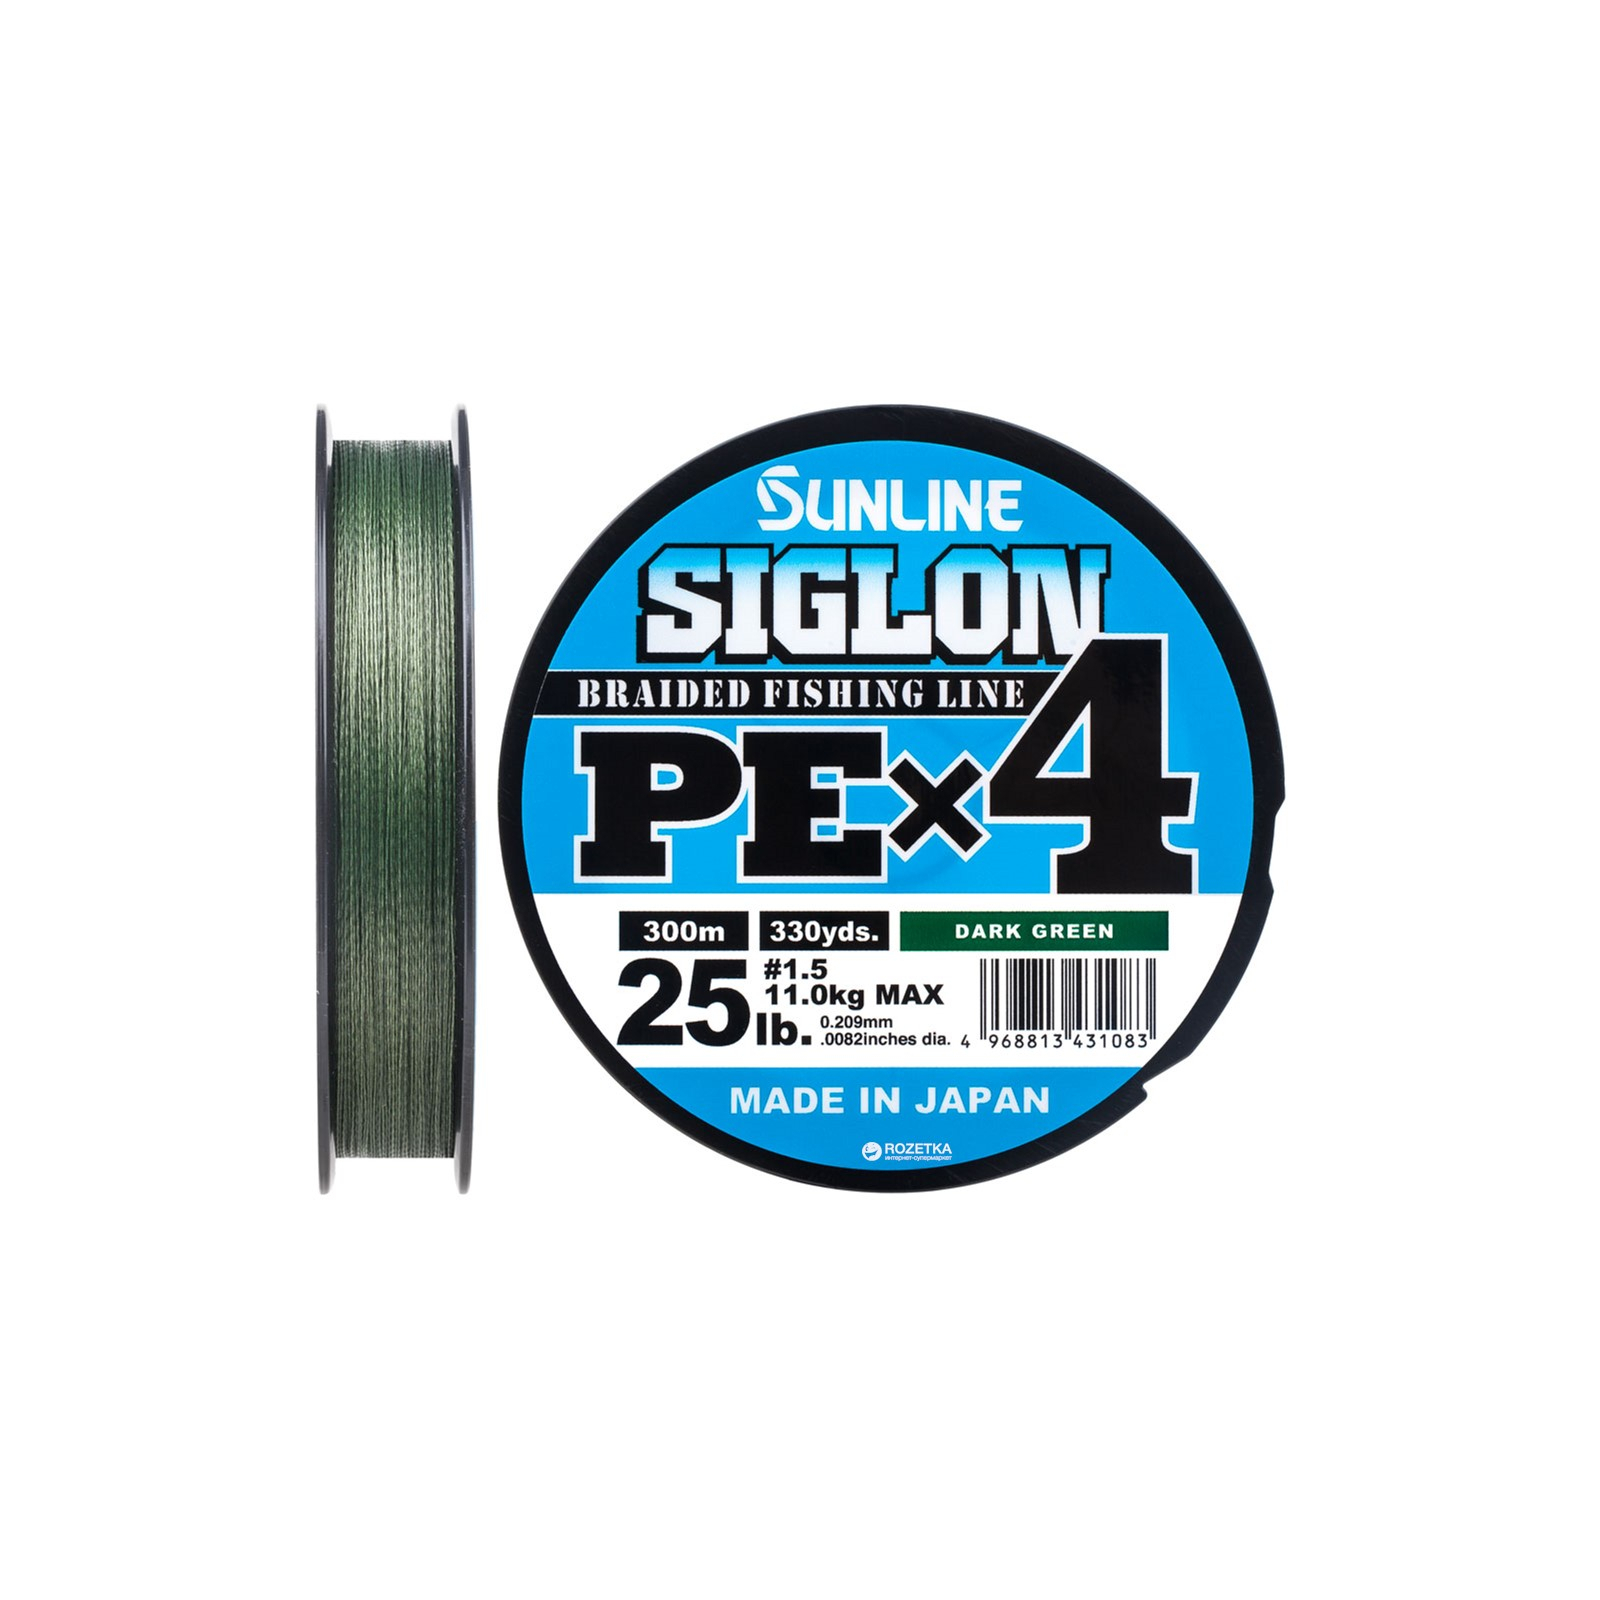 Шнур Sunline Siglon PE н4 300m 1.5/0.209mm 25lb/11.0kg Dark Green (1658.09.48)